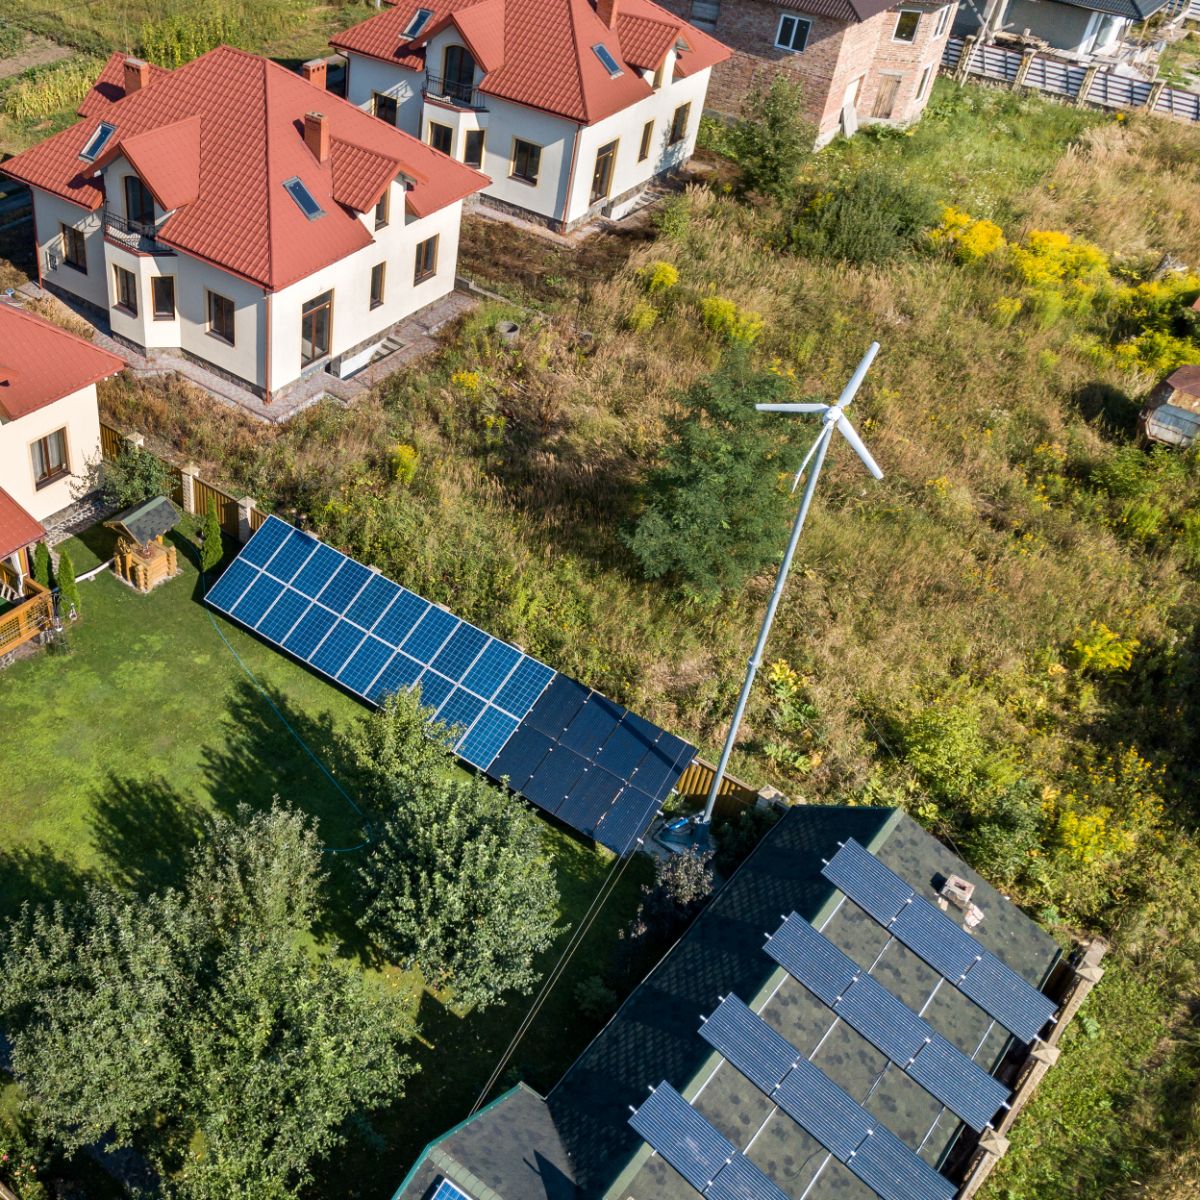 Photovoltaic self-consumption installations